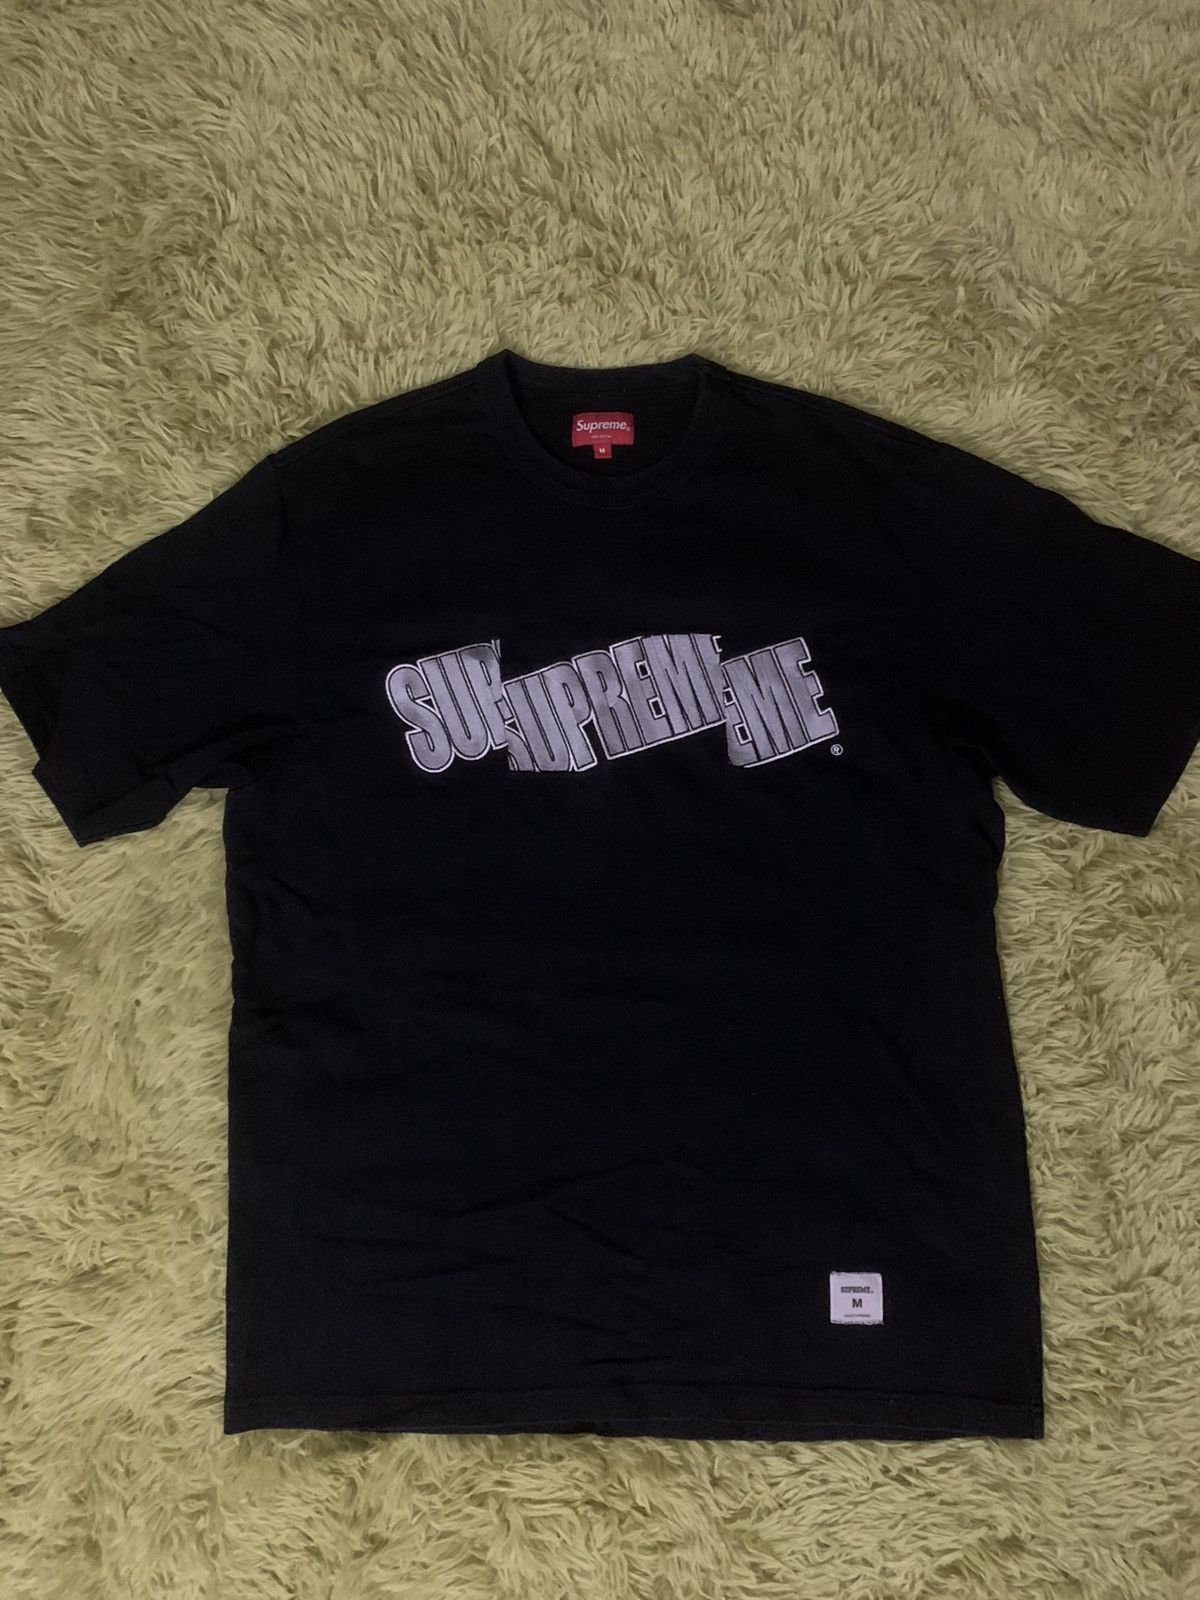 Supreme Embroidered Shirt | Grailed